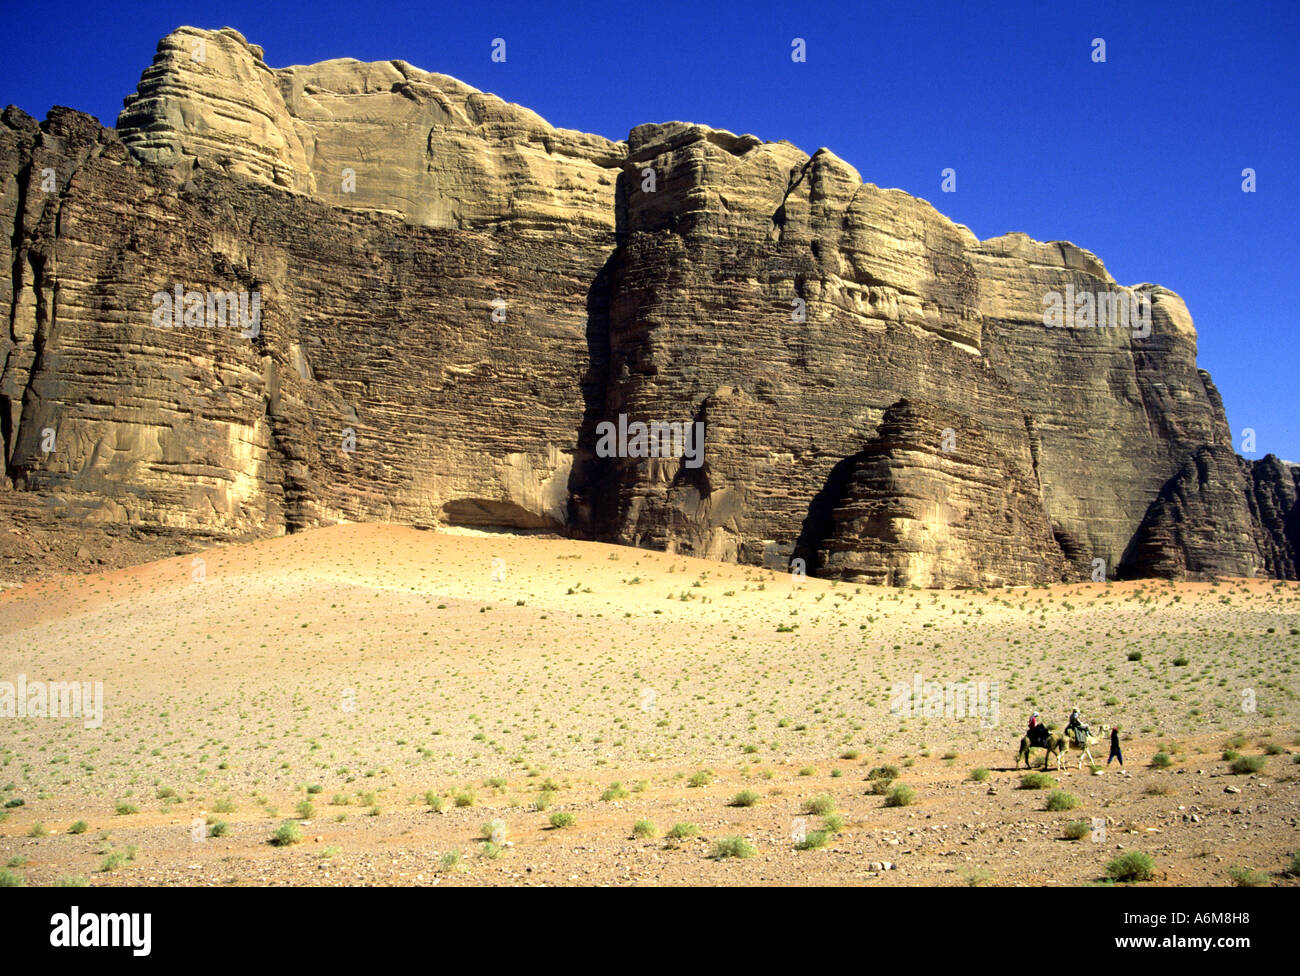 Jagged sandstone jebels rise out of the desert floor, Wadi Rum, Jordan Stock Photo